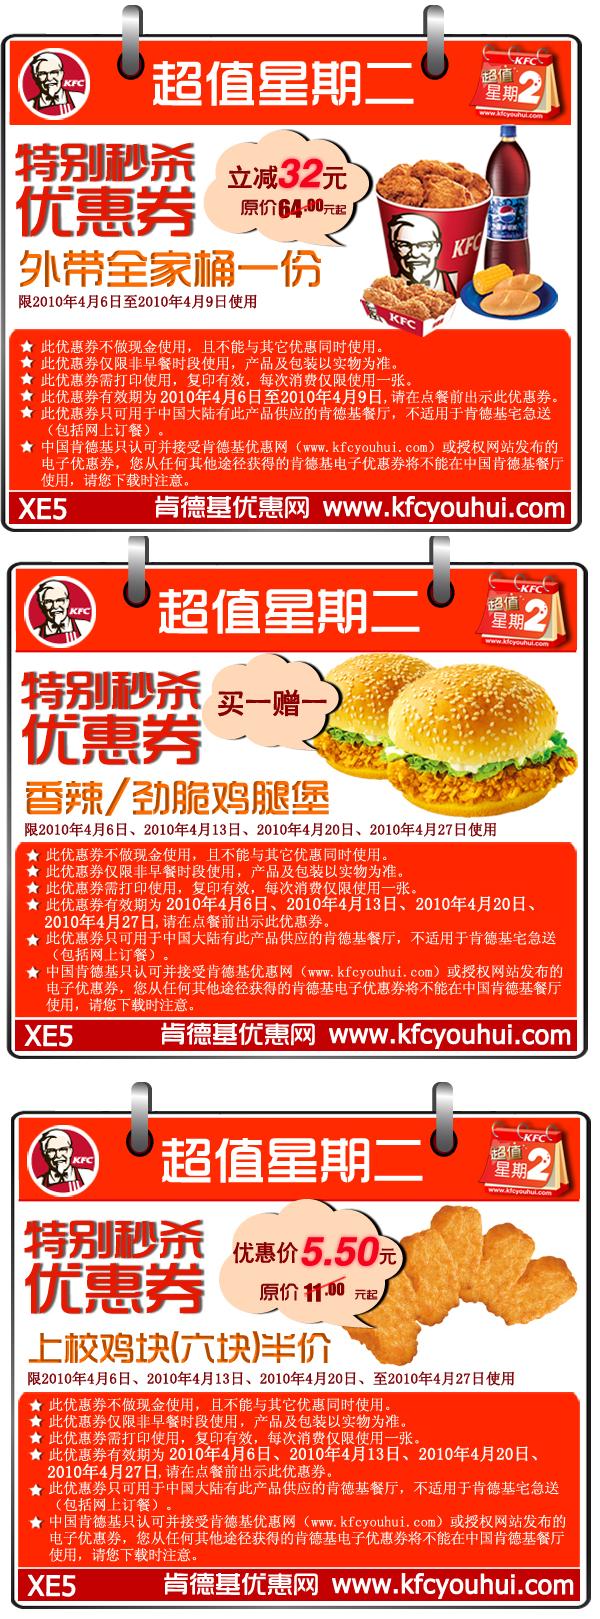 KFC Refused To Honor Coupon, Chinese Customers Angry – chinaSMACK